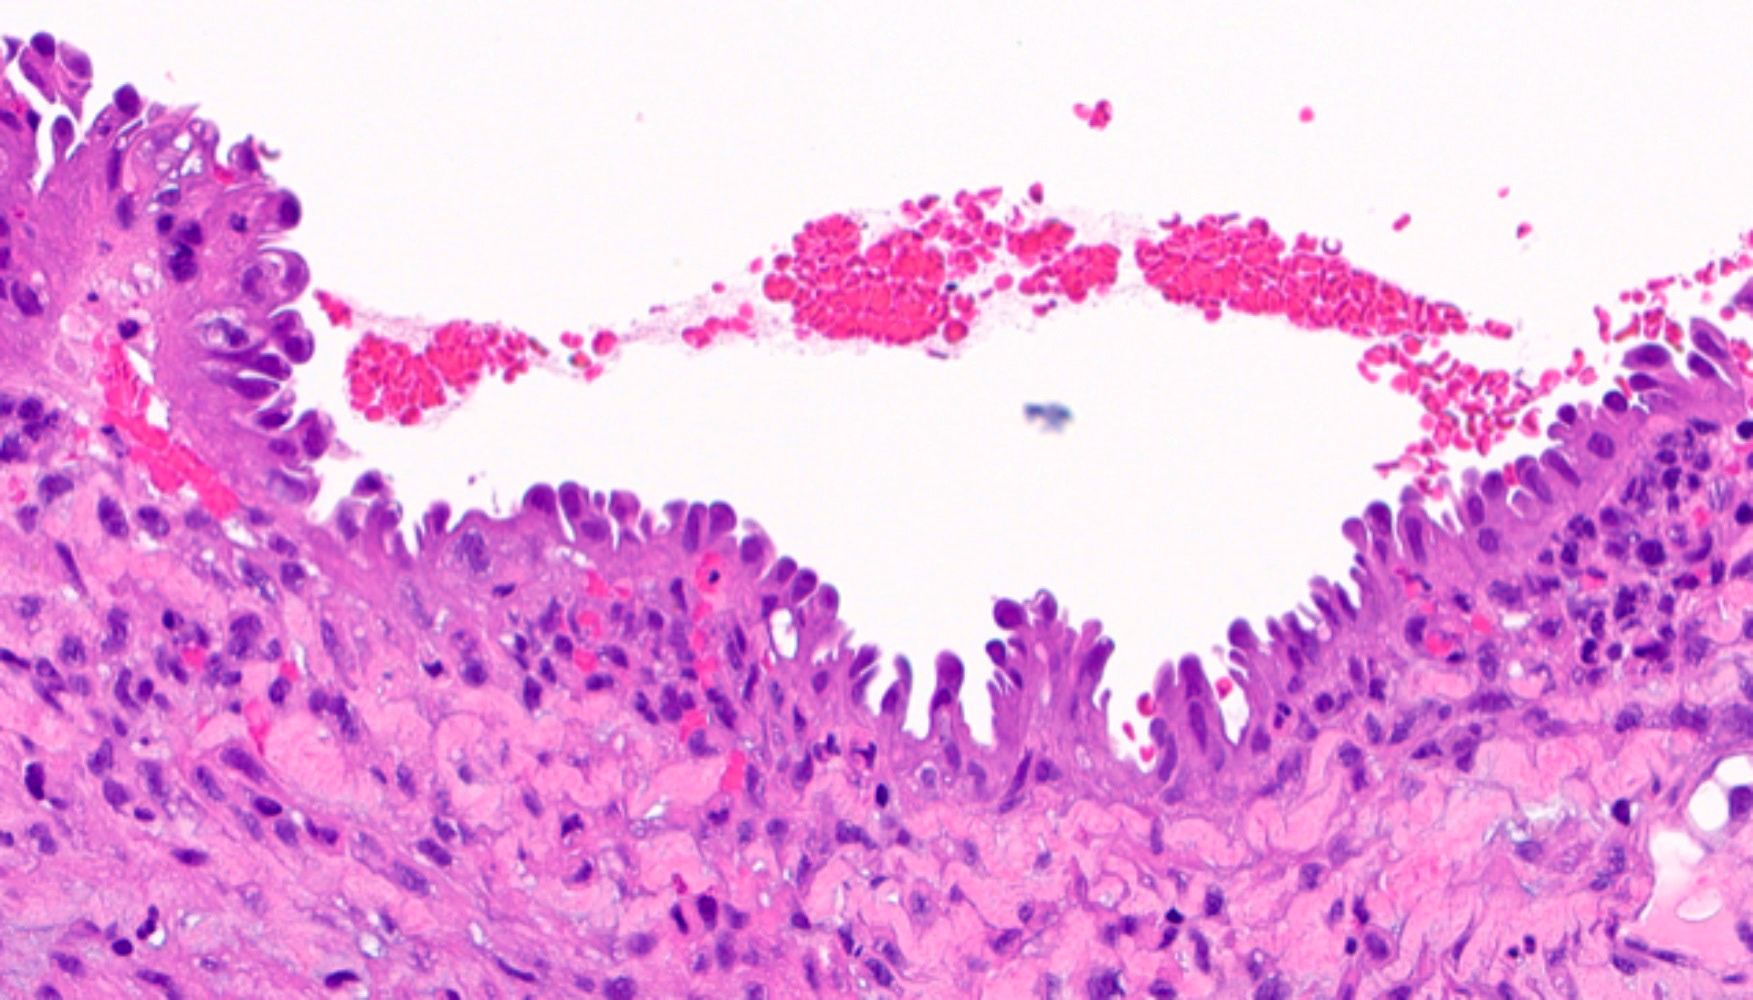 Papillary syncytial metaplasia